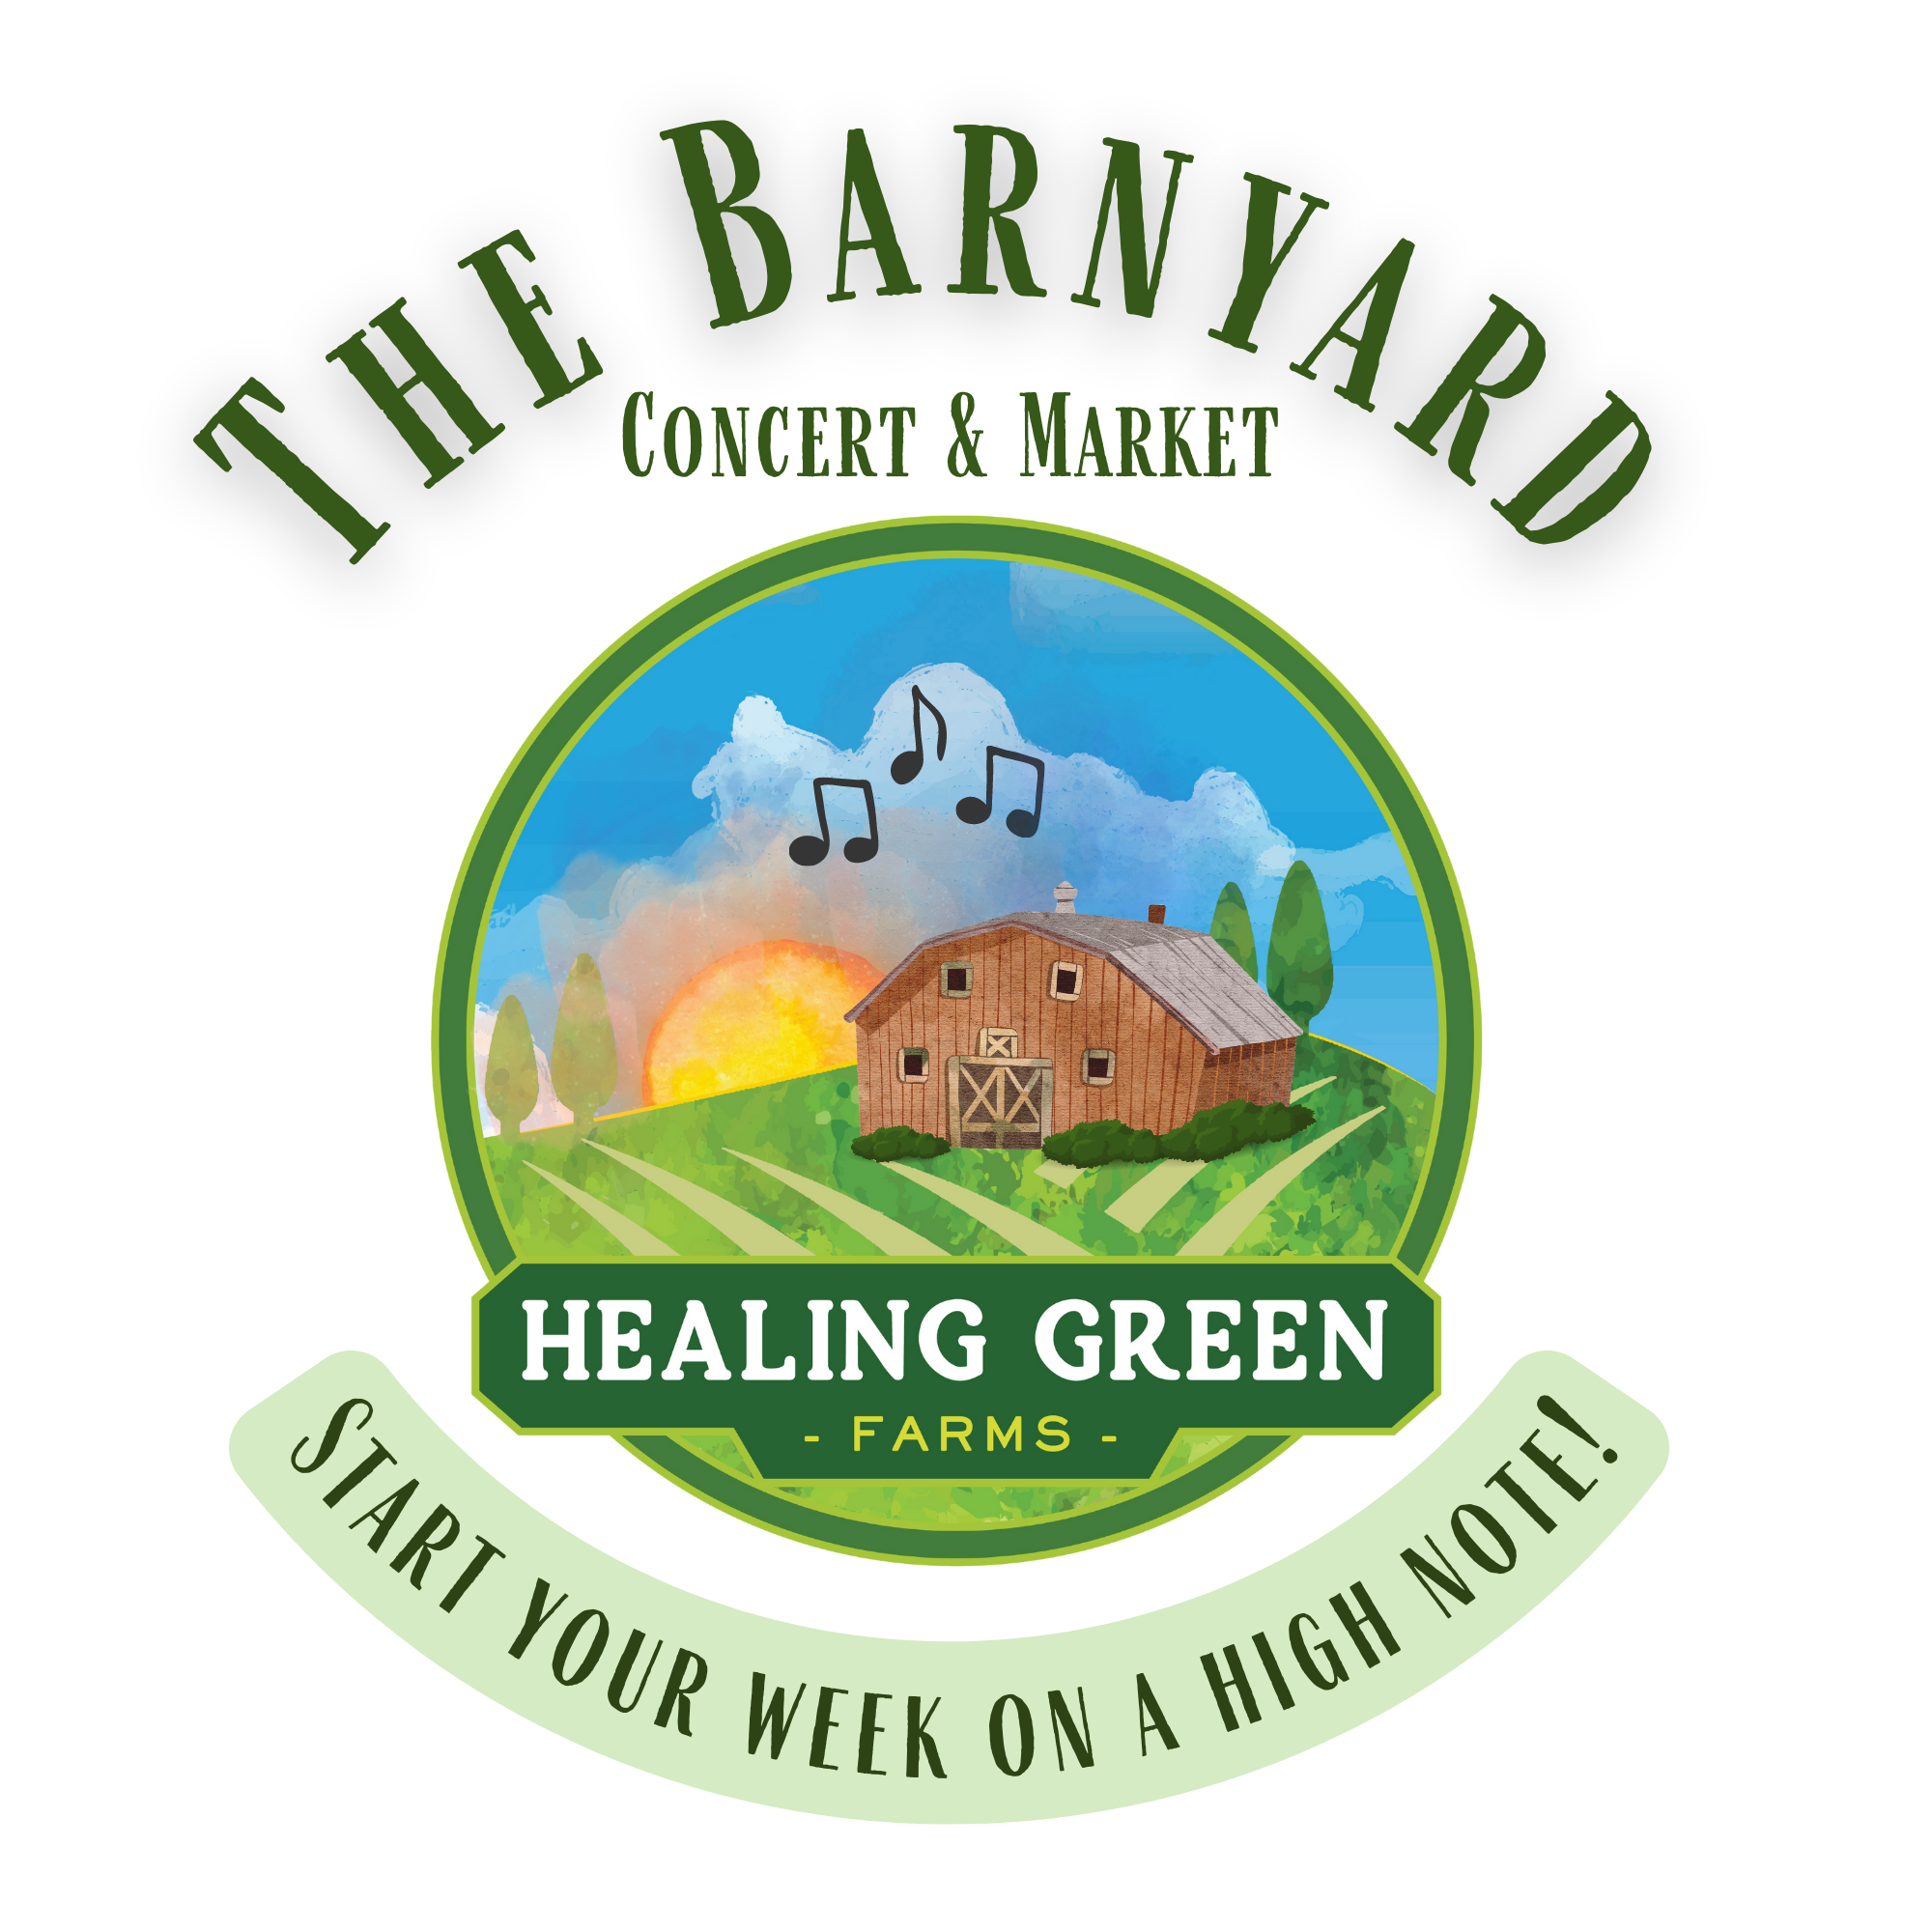 Healing Green Farms Presents The Barnyard Concert and Market Series